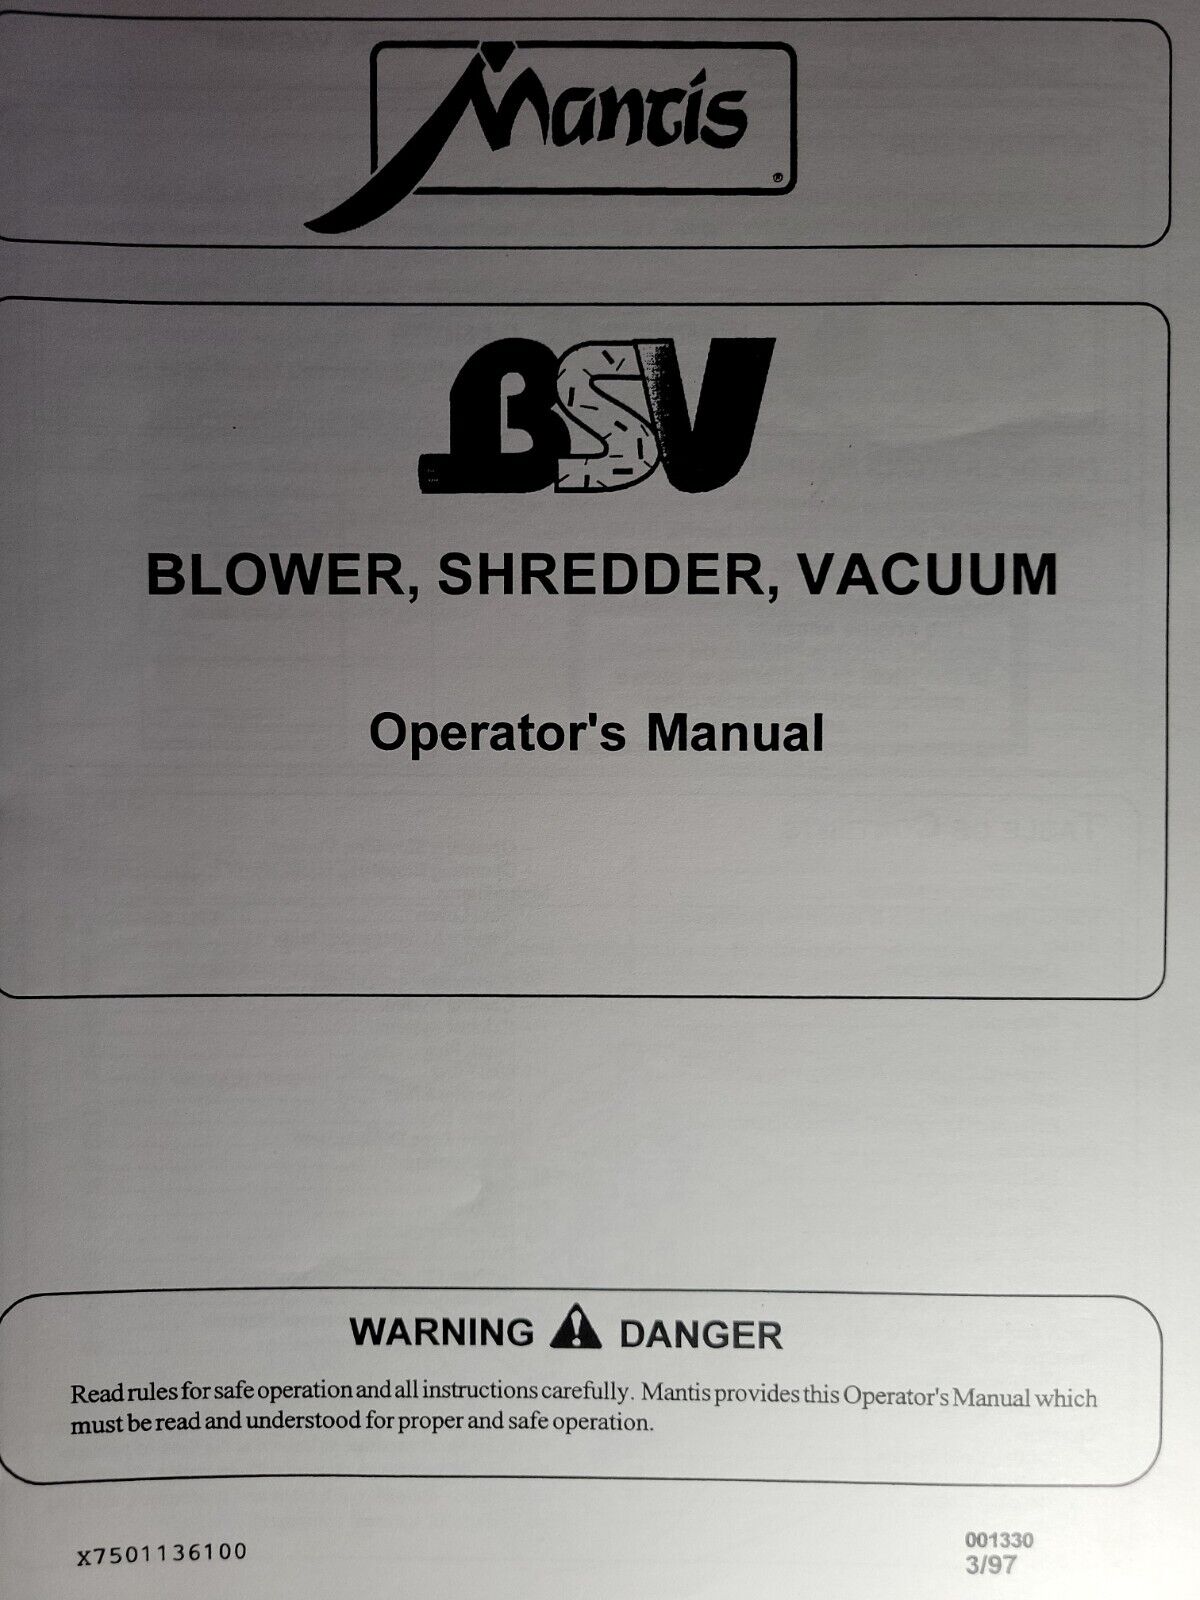 Mantis Little Wonder BSV Handheld Blower Shredder Vacuum Owner & Parts Manual 